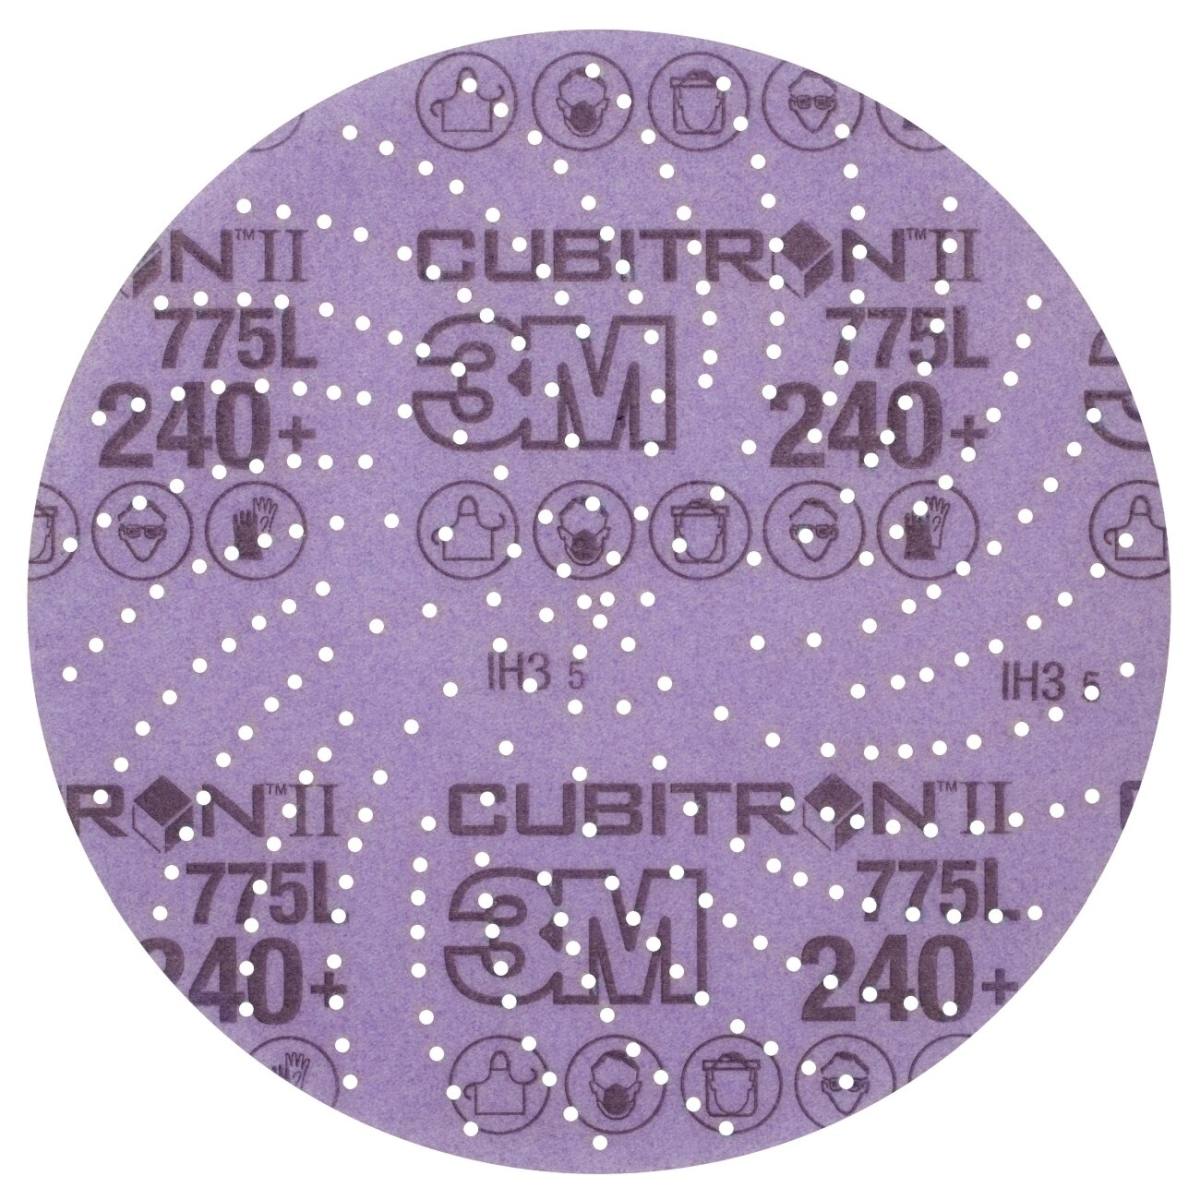 3M Cubitron II Hookit film disc 775L, 150 mm, 240 , multihole #47098